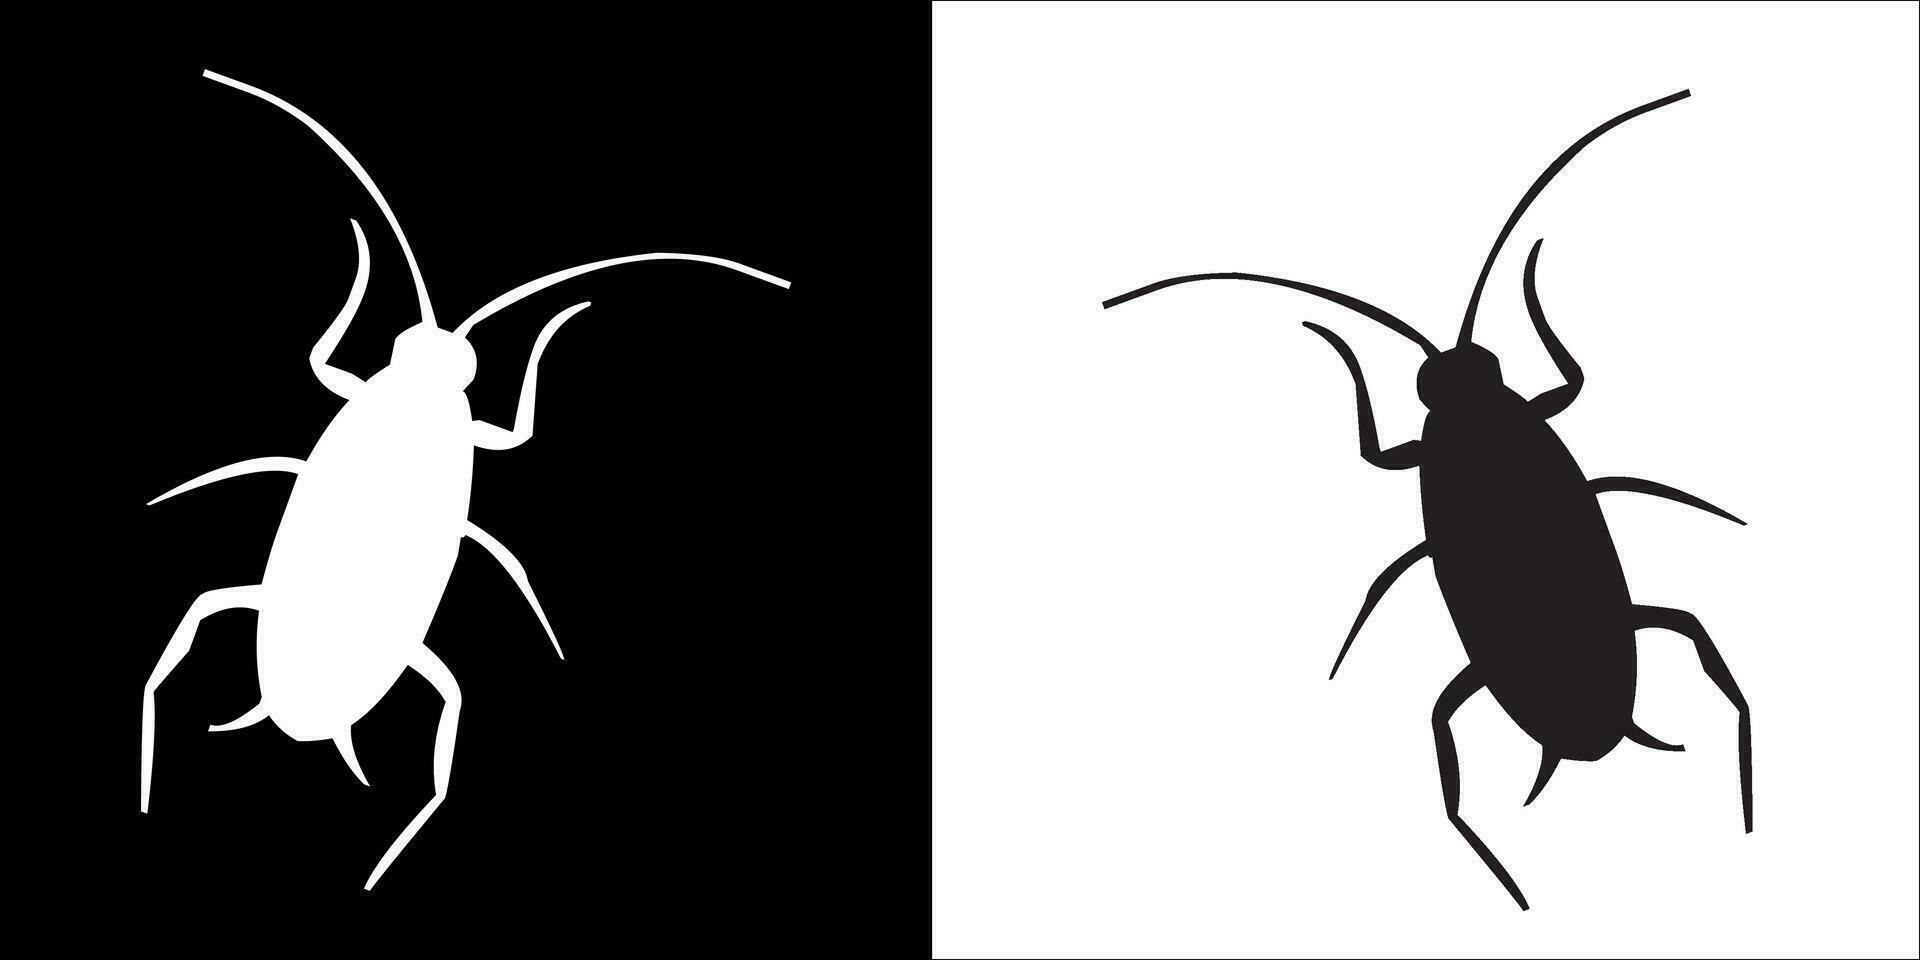 Illustration Vektor Grafik von Insekt Symbol